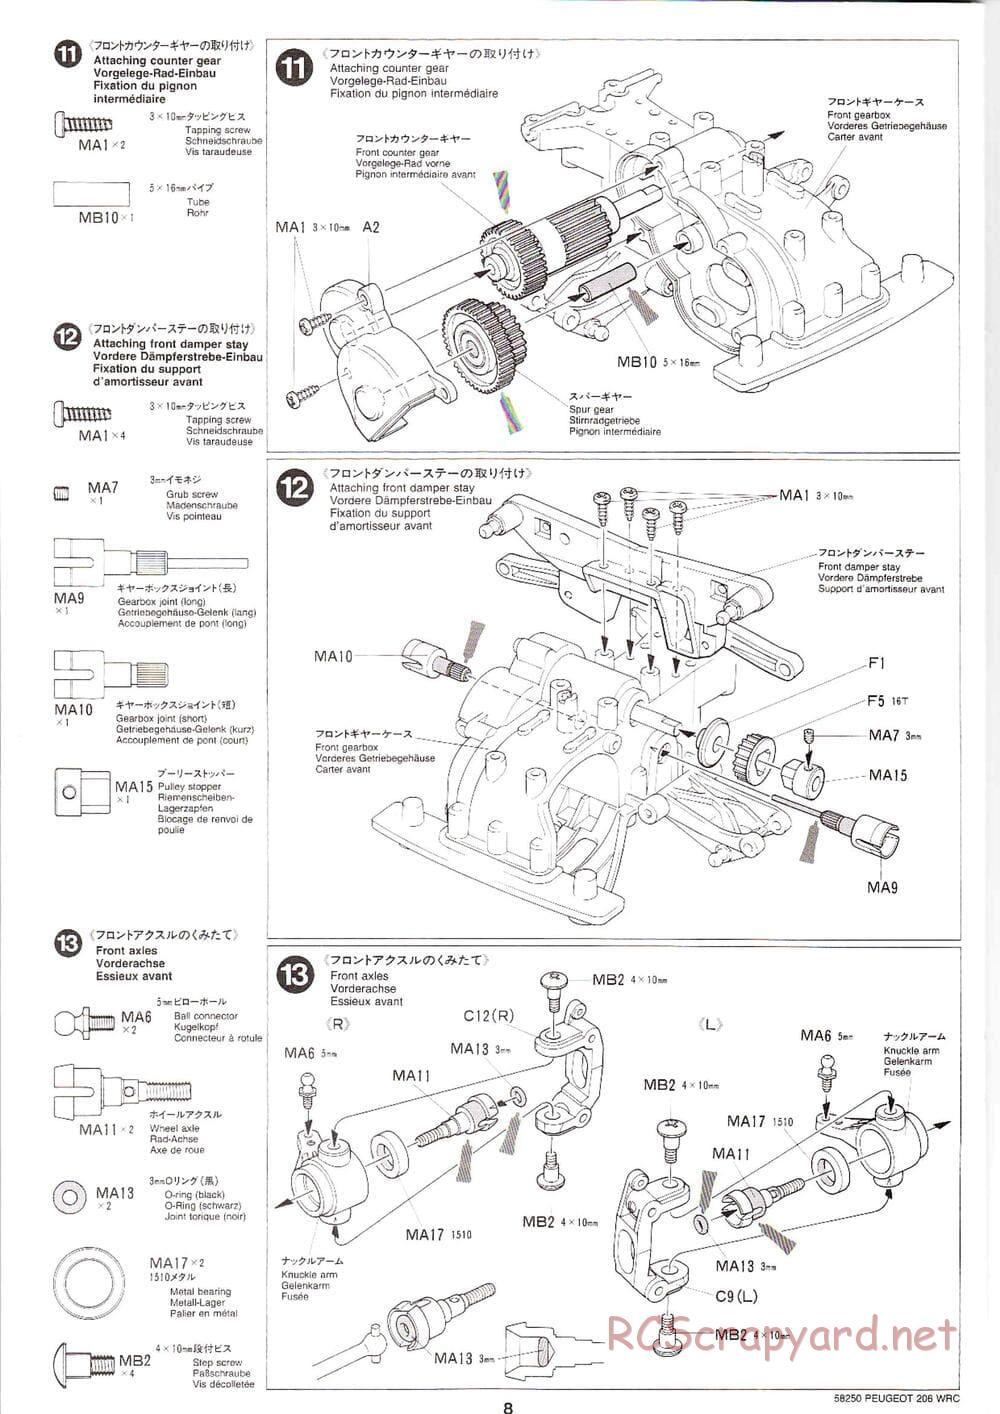 Tamiya - Peugeot 206 WRC - TA-03FS Chassis - Manual - Page 8